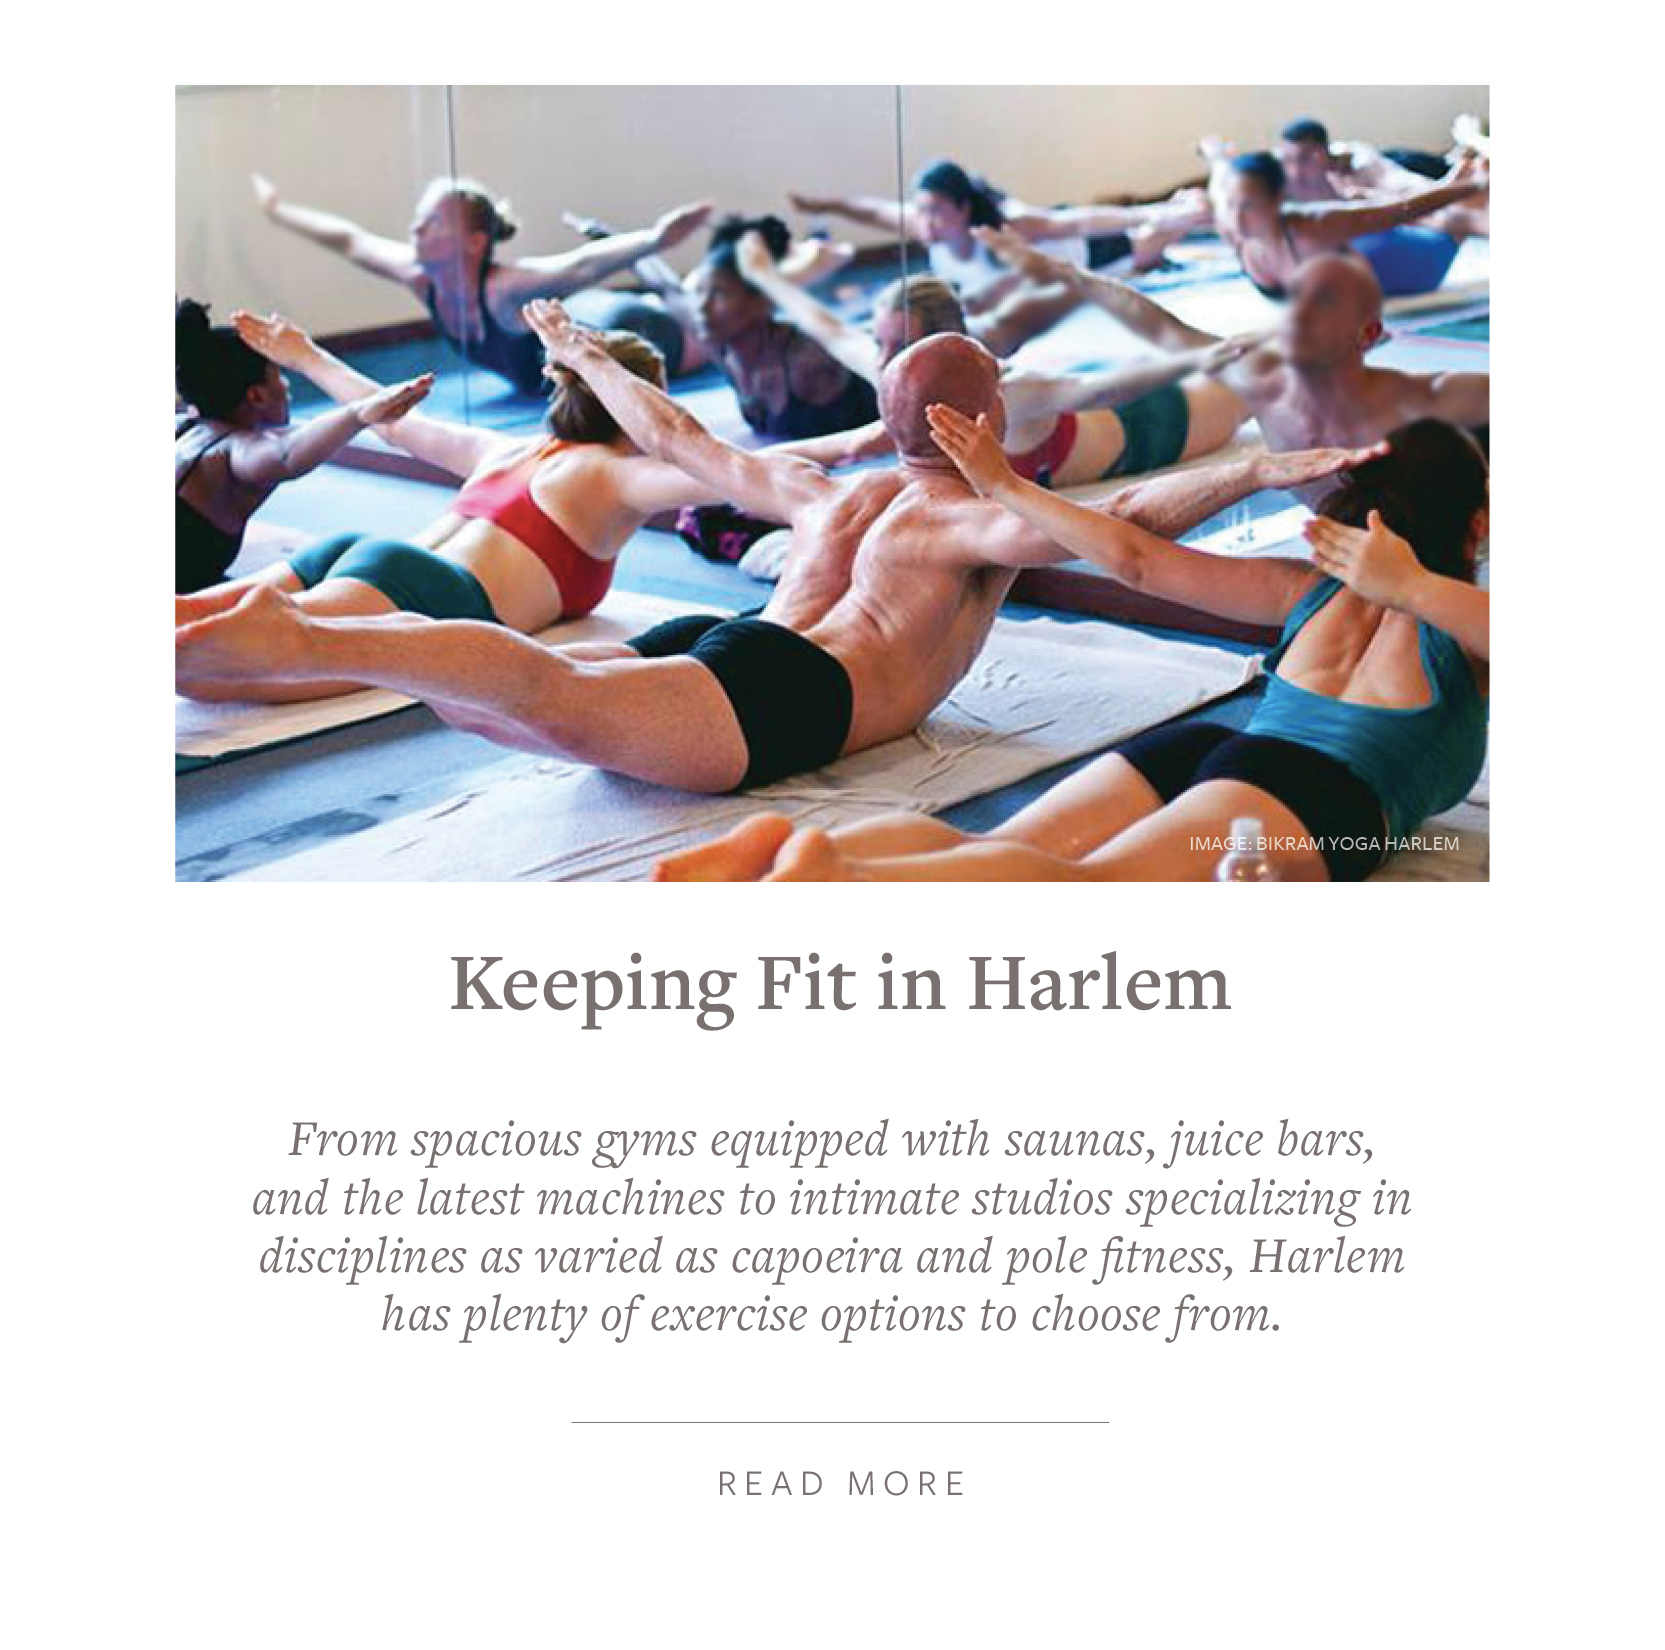 Harlem's Spacious Gyms